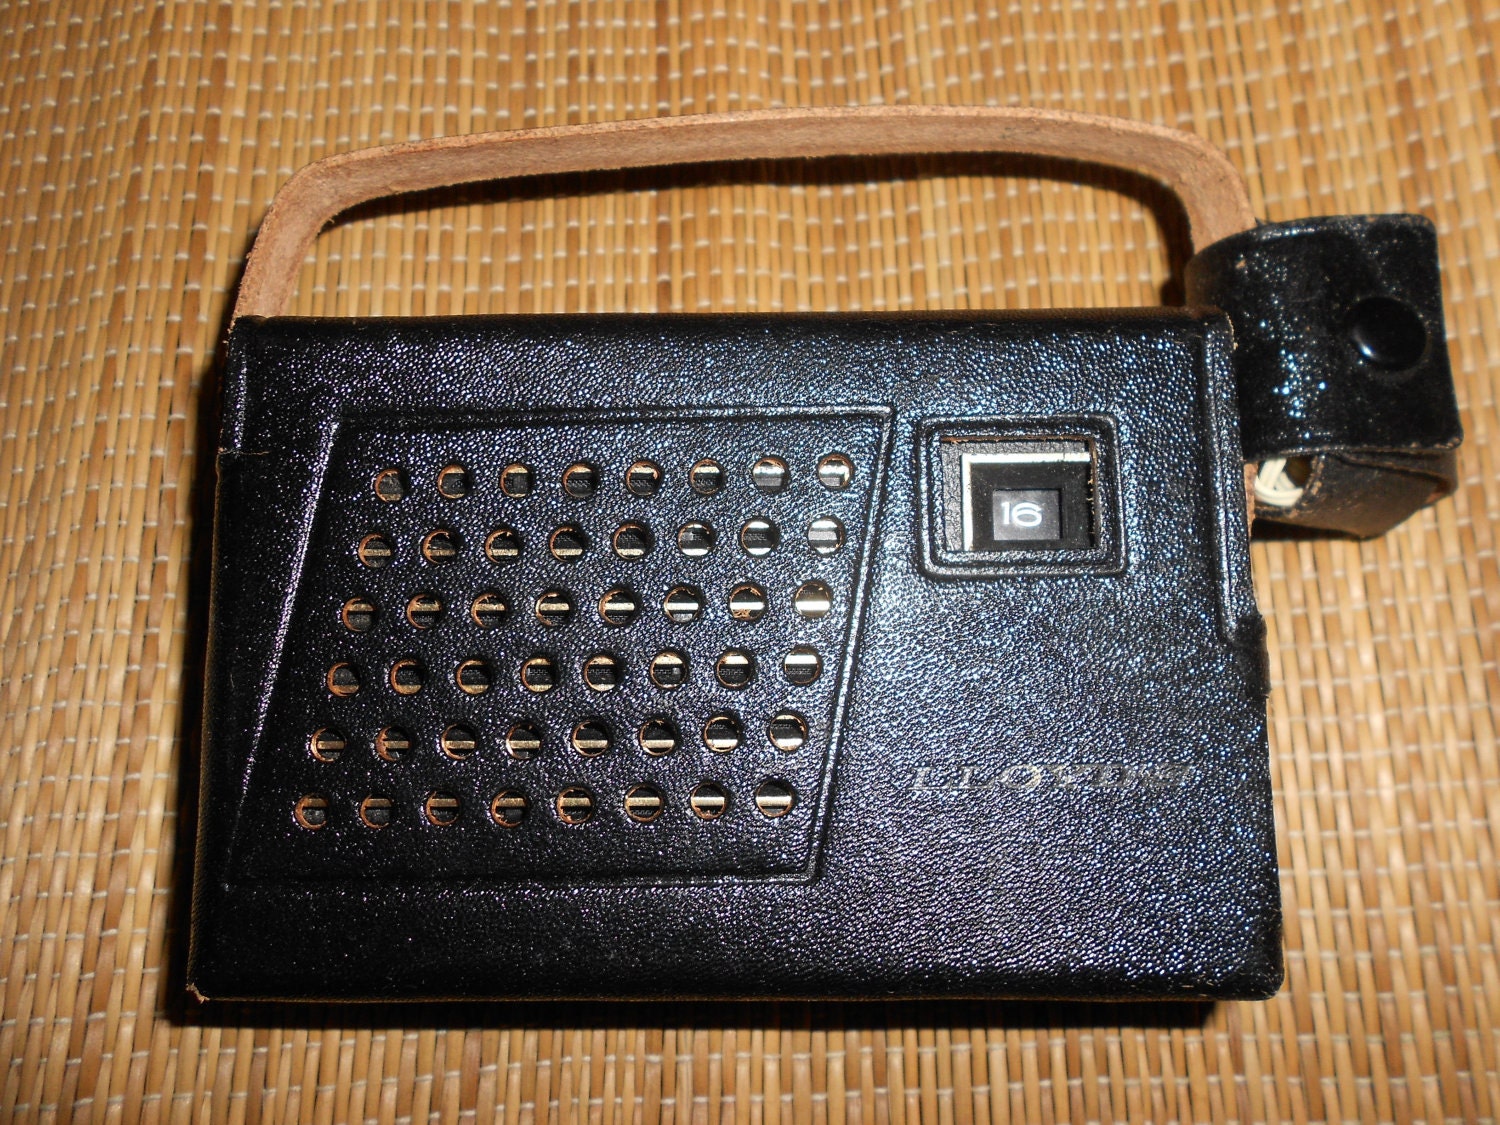 60s pocket transistor radio for sale